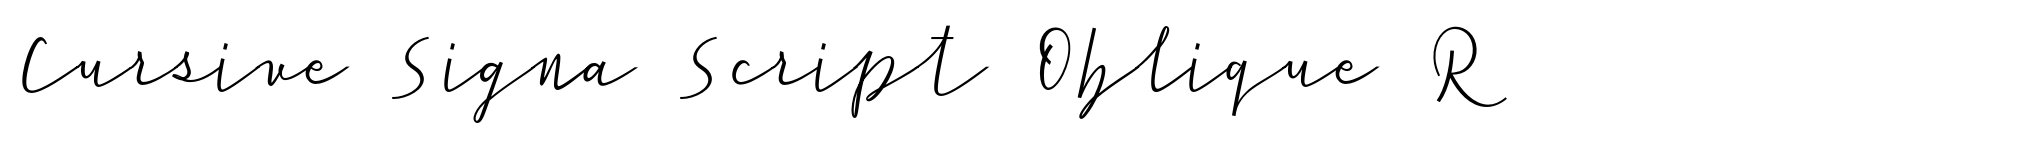 Cursive Signa Script Oblique R image